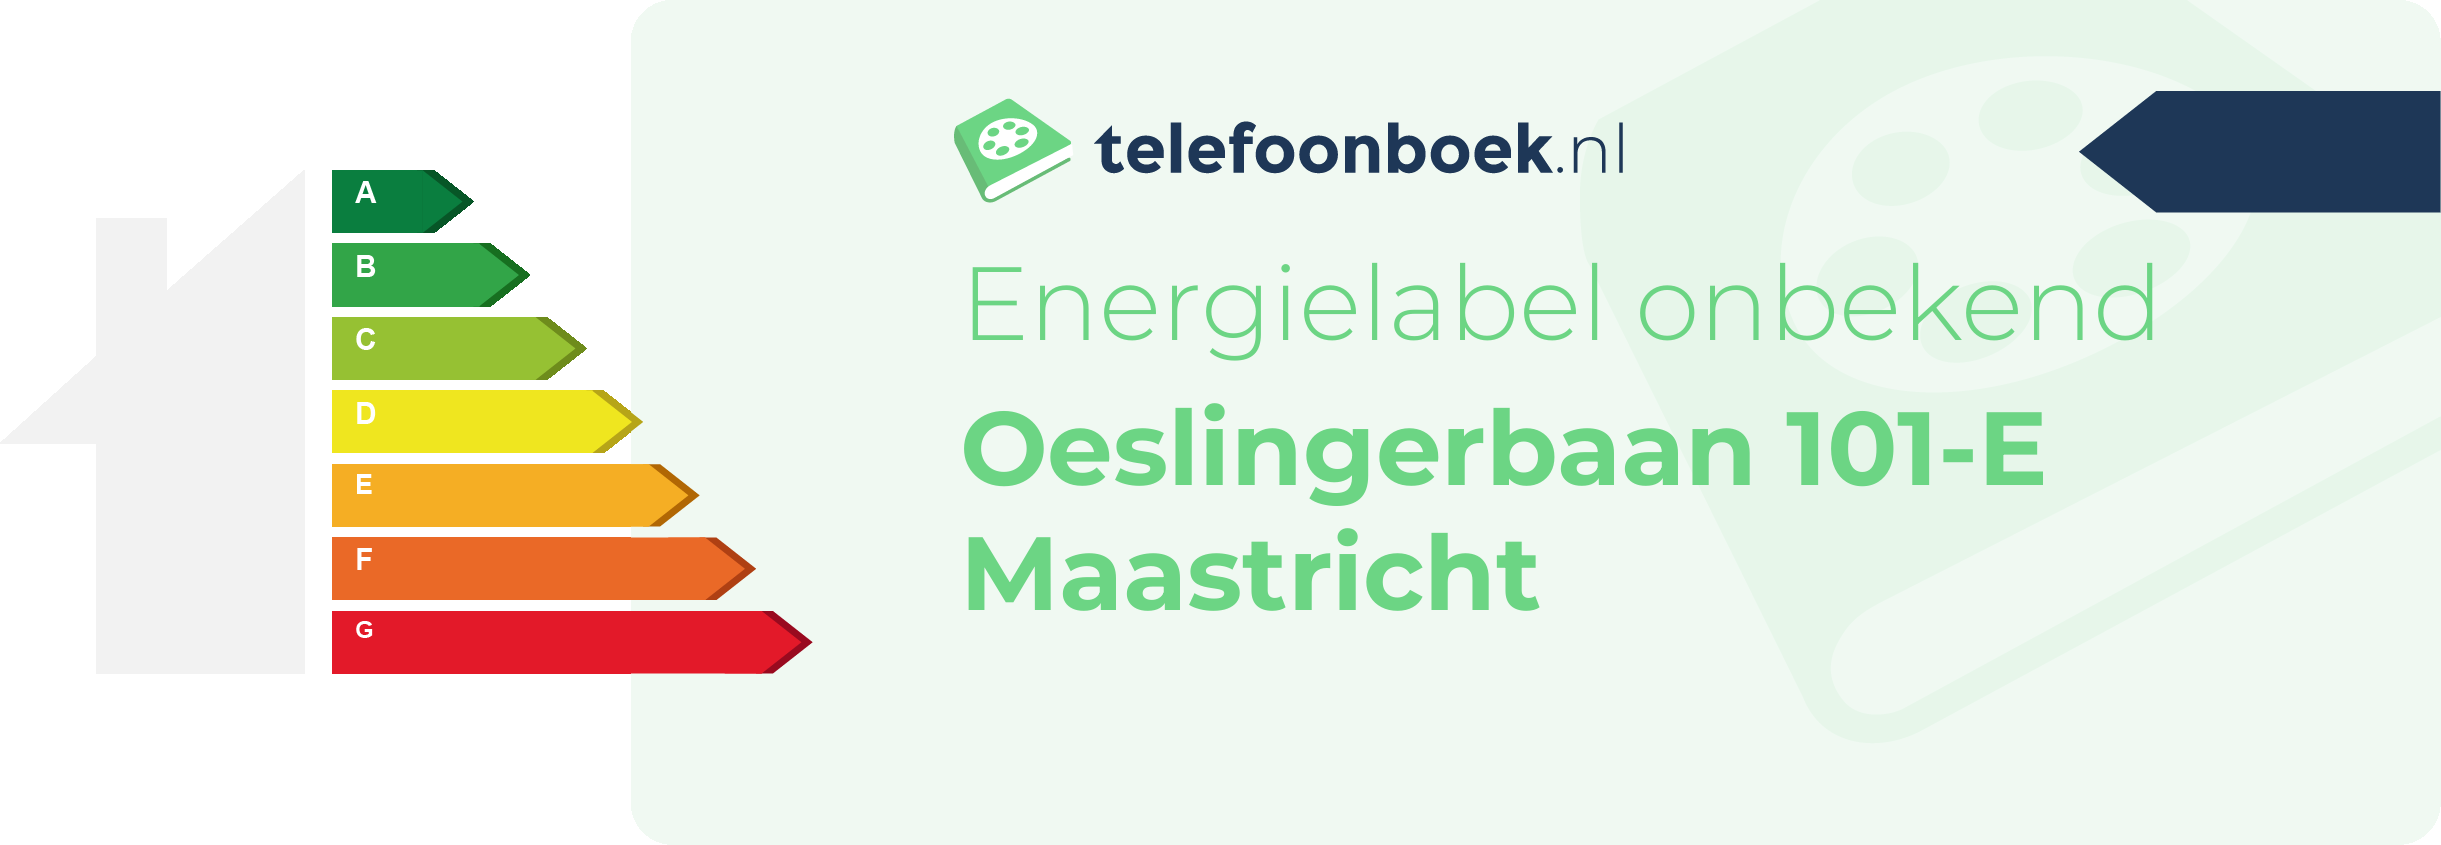 Energielabel Oeslingerbaan 101-E Maastricht